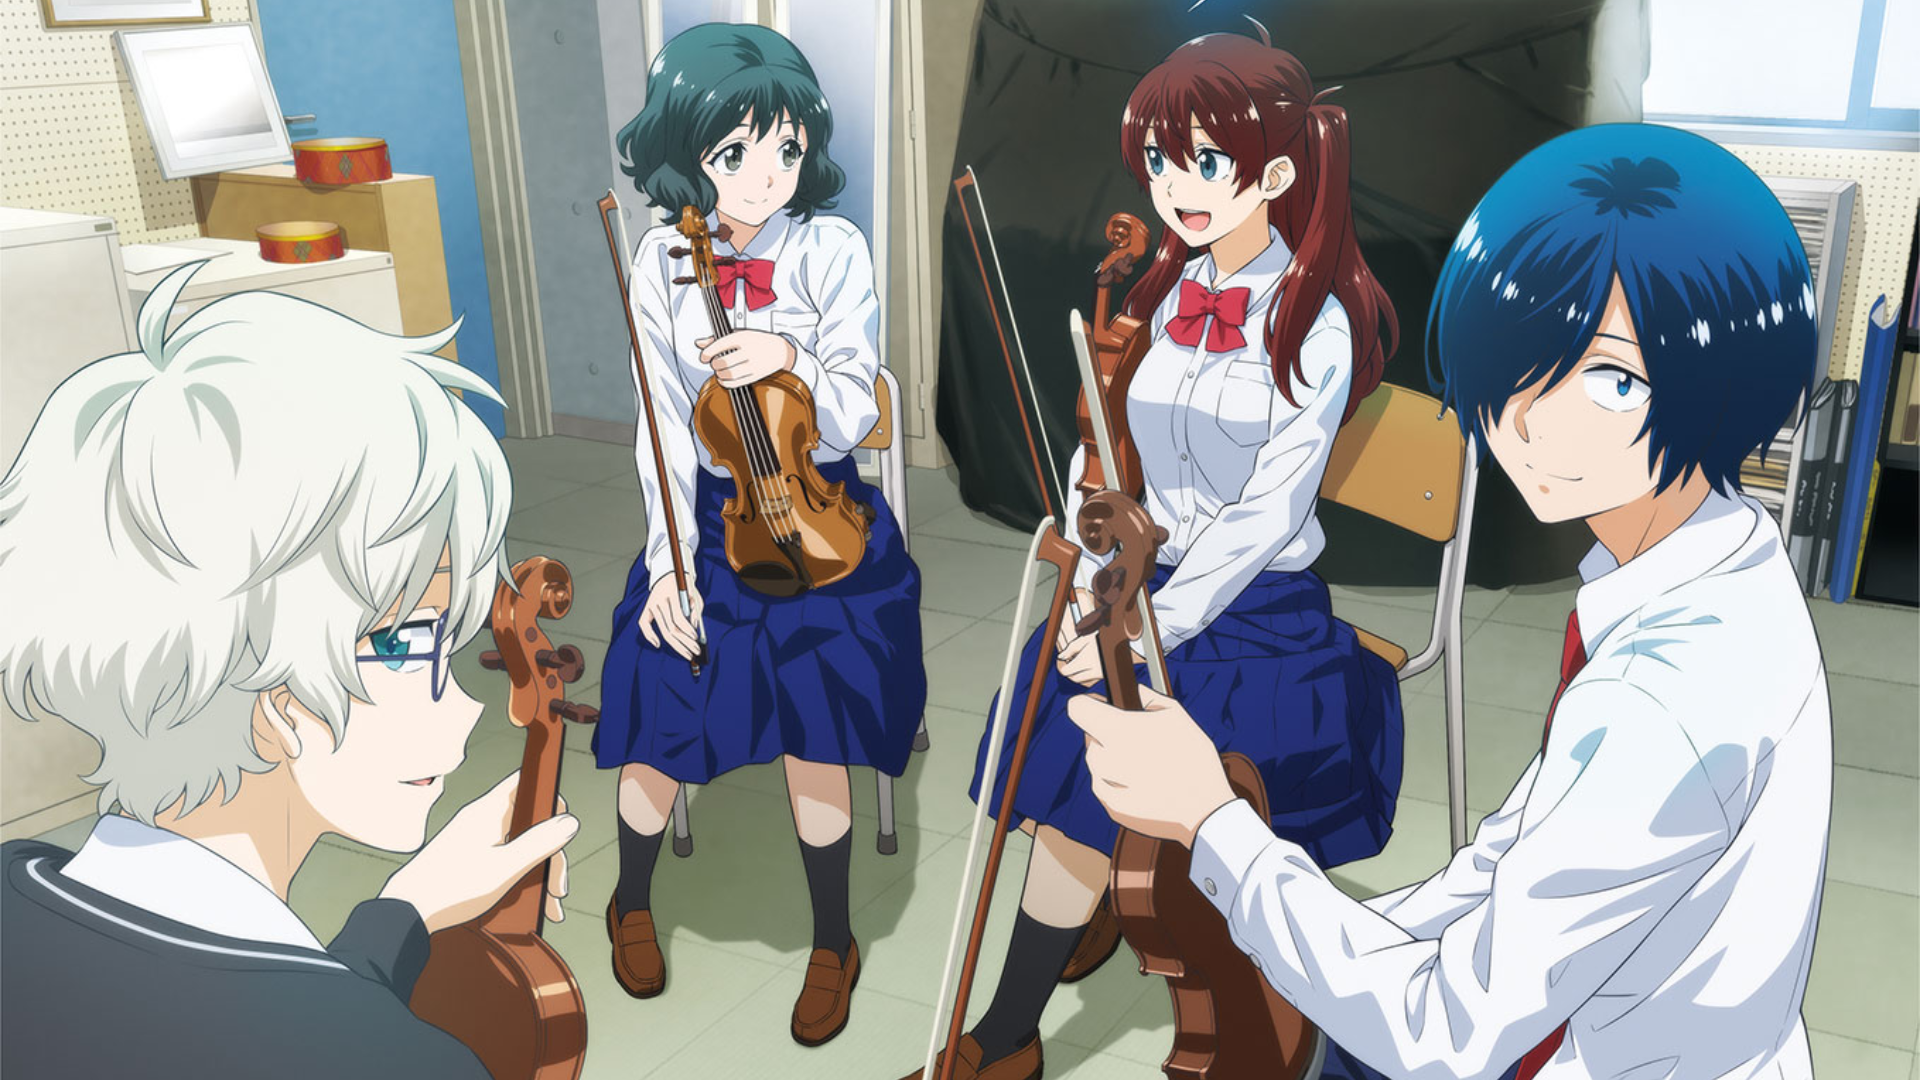 Anime, emotion & orchestral magic in Genshin Impact - ABC listen